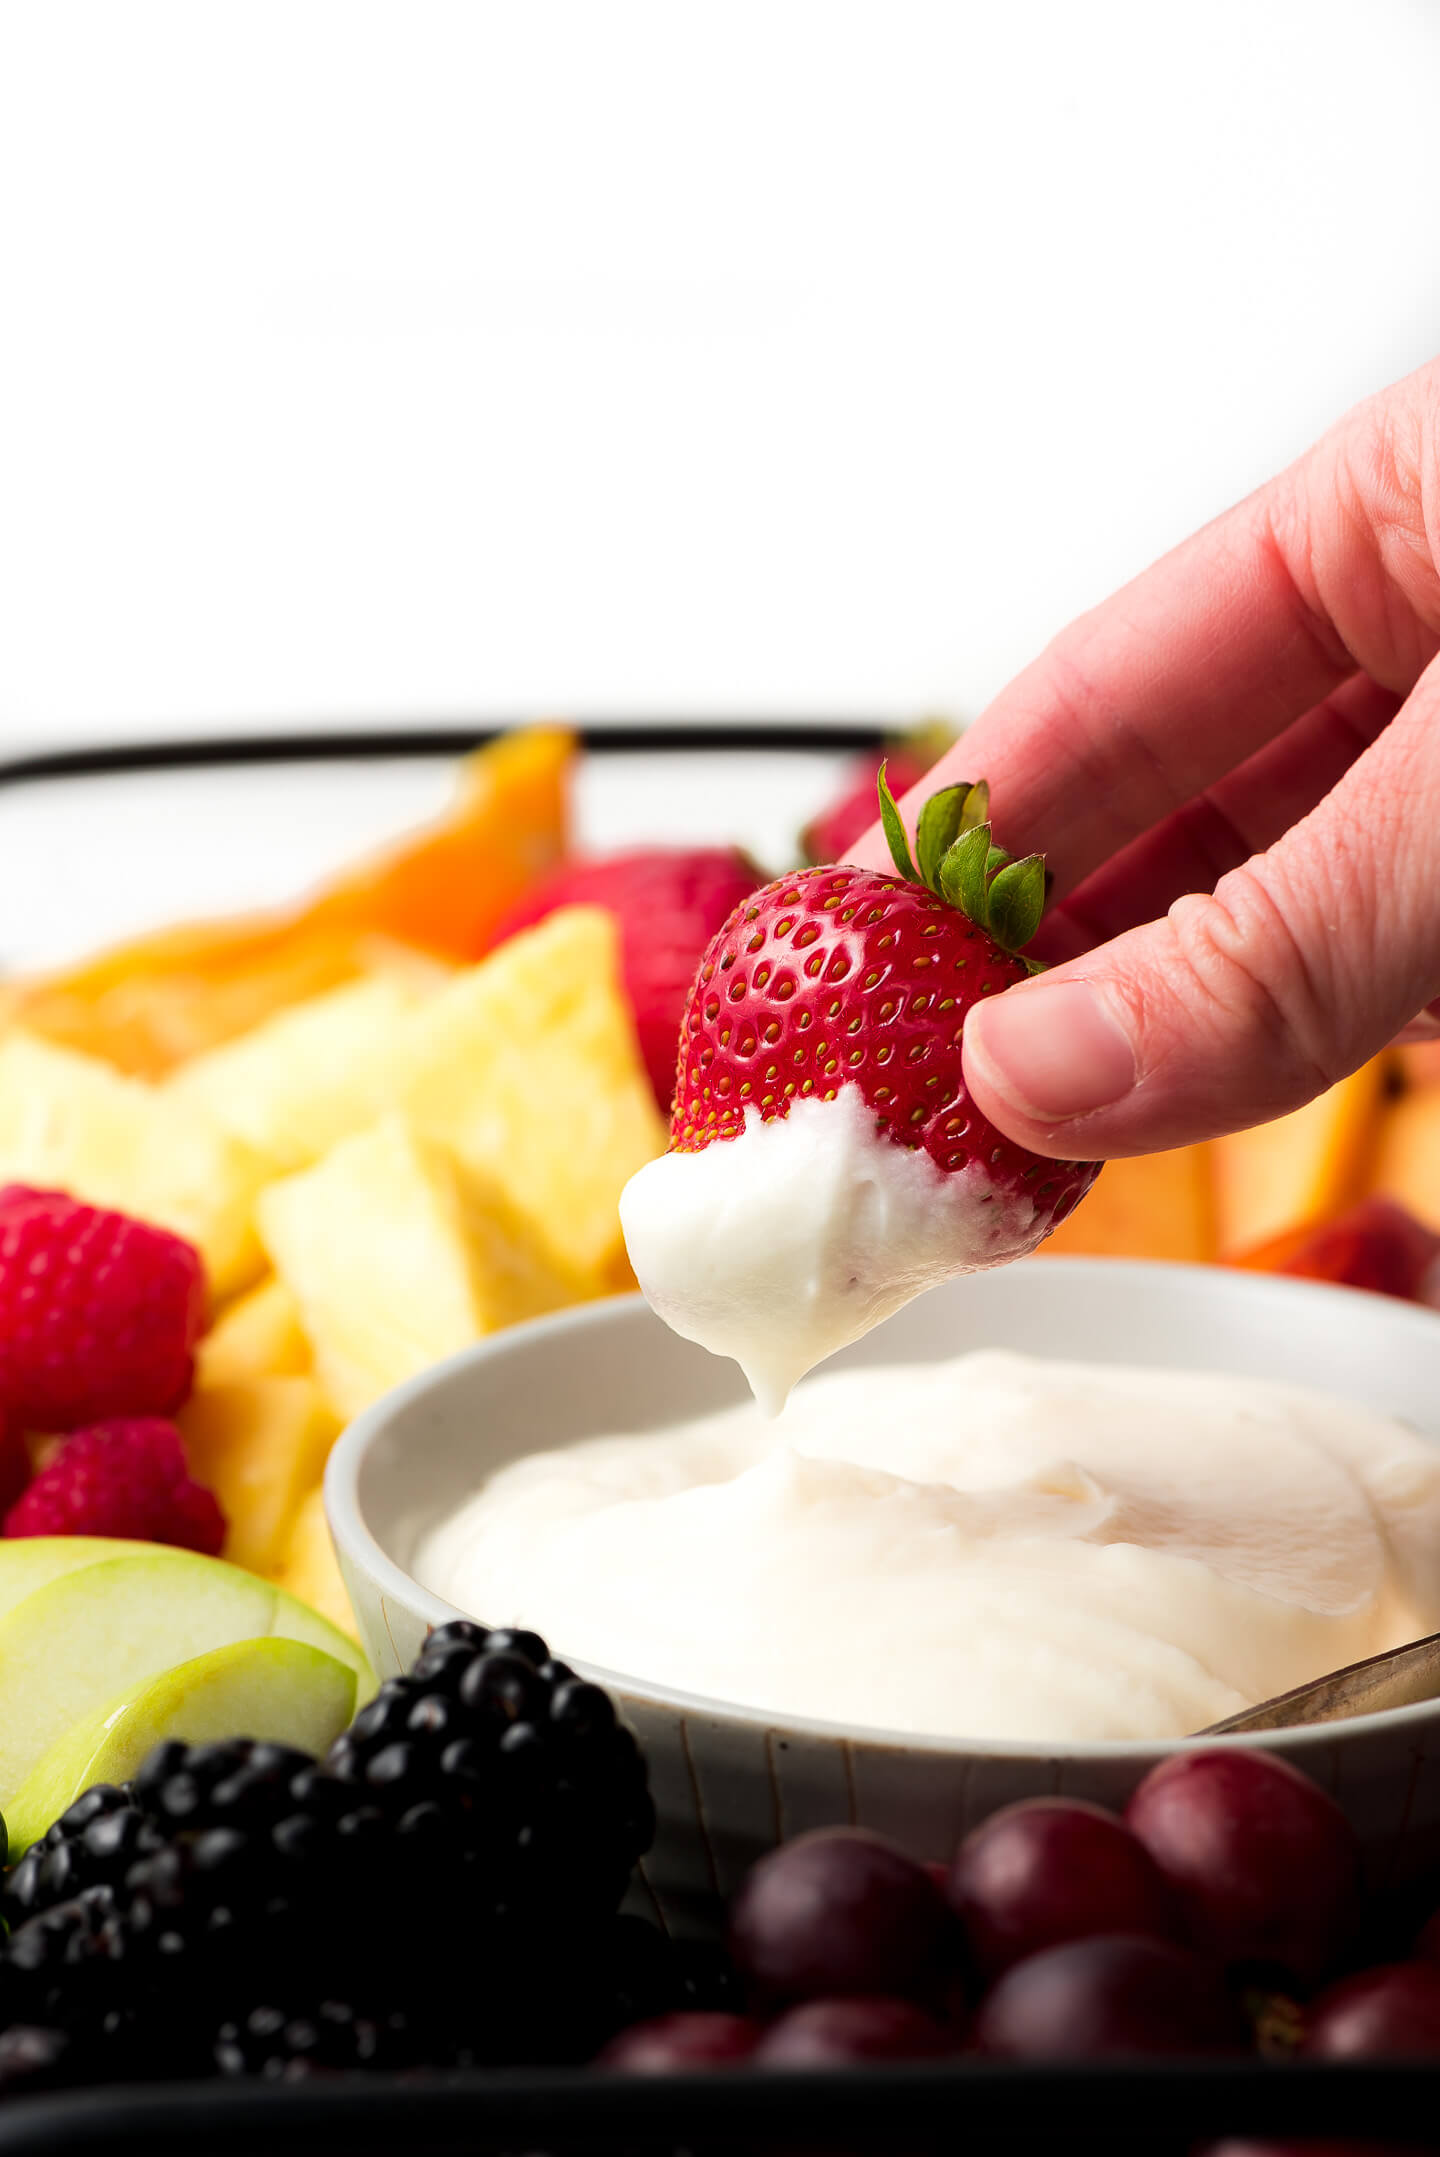 Dipping a strawberry into a white creamy dip.